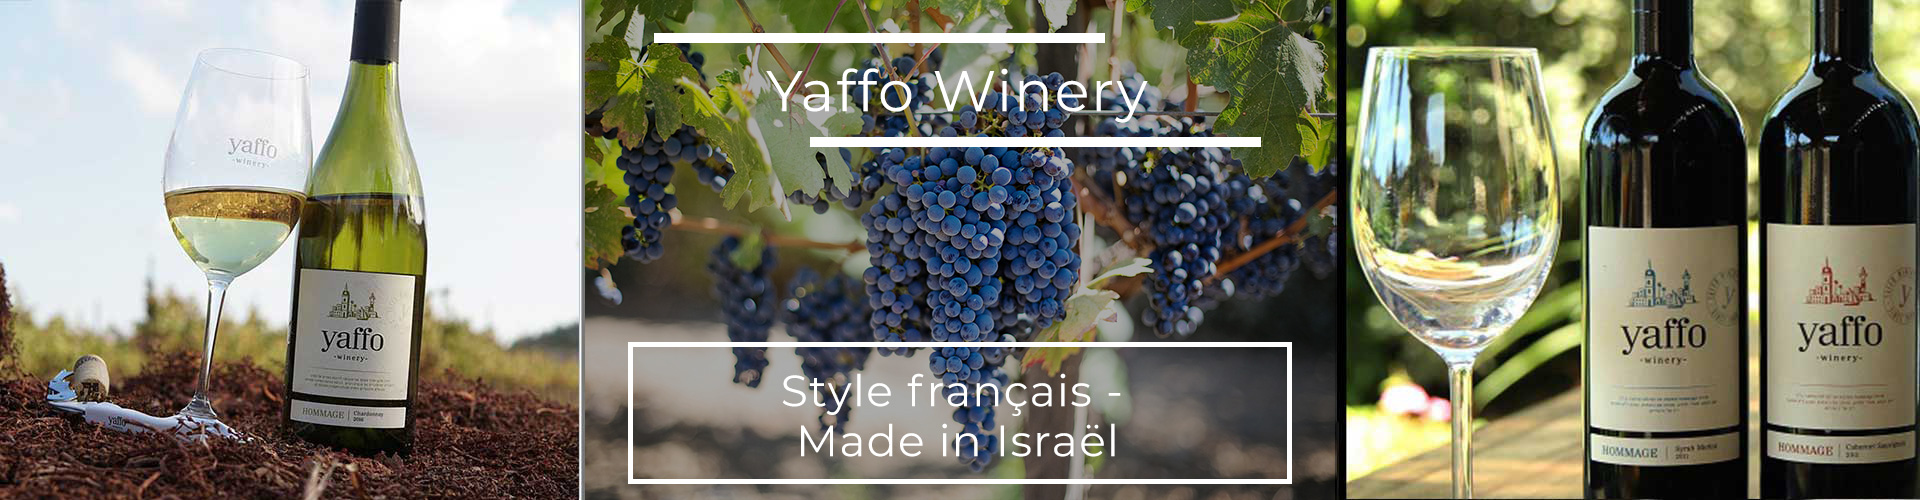 Negev Desert YAFFO WINERY - Vins & Epicerie Fine casher/cacher d'Israël à Genève en Suisse - Negev Desert